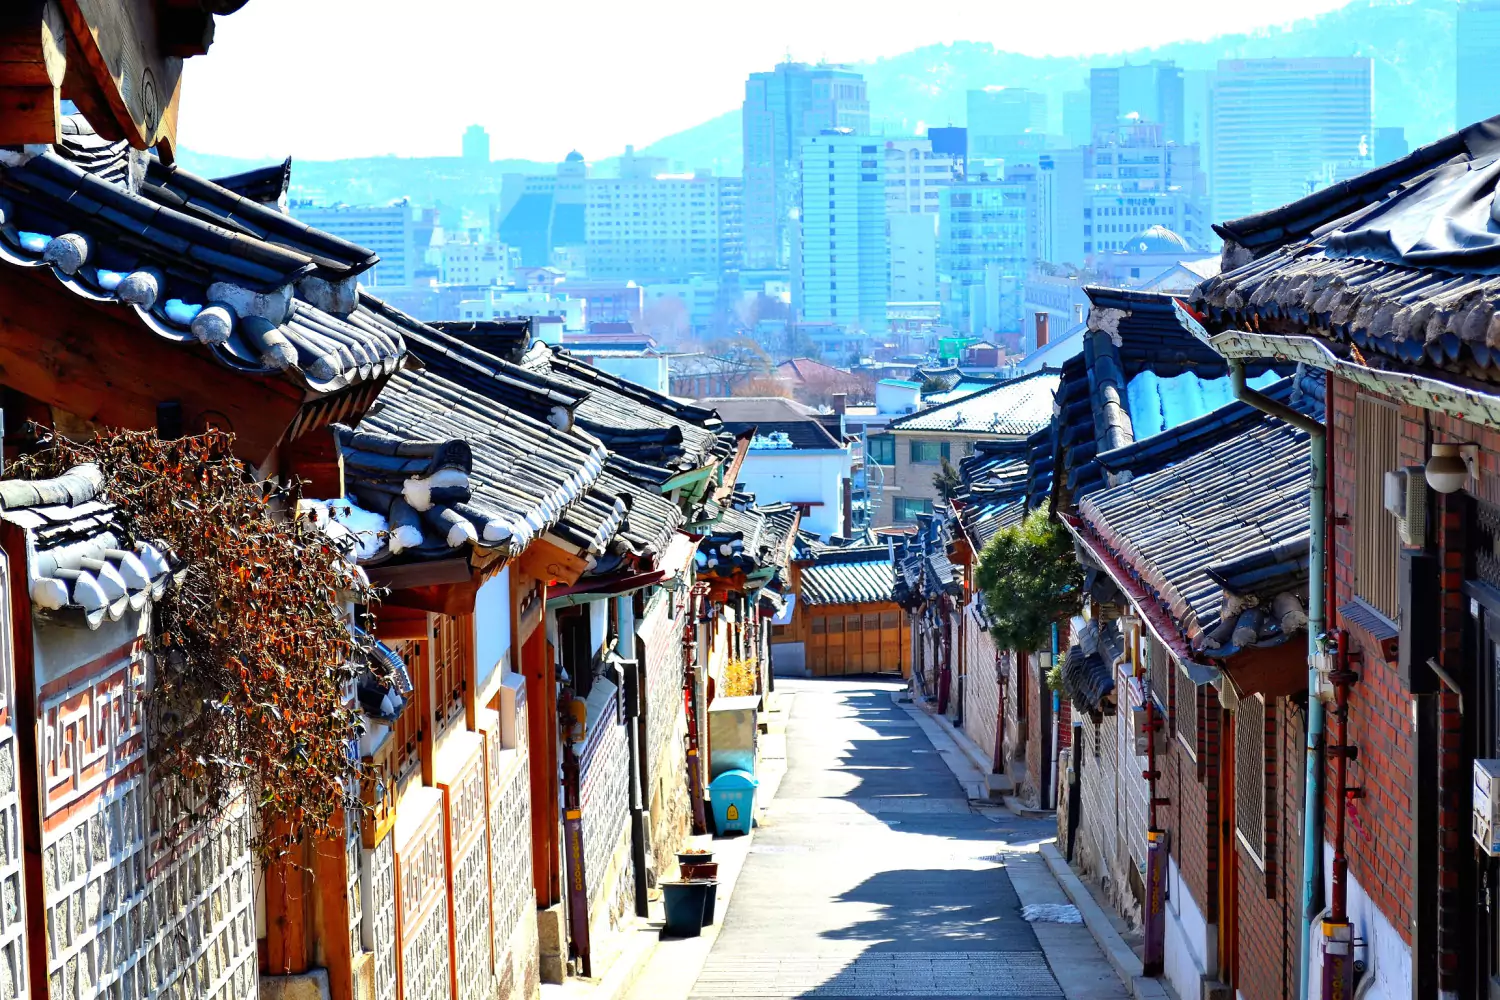 Bukchon Hanok Village - Seoul - South Korea